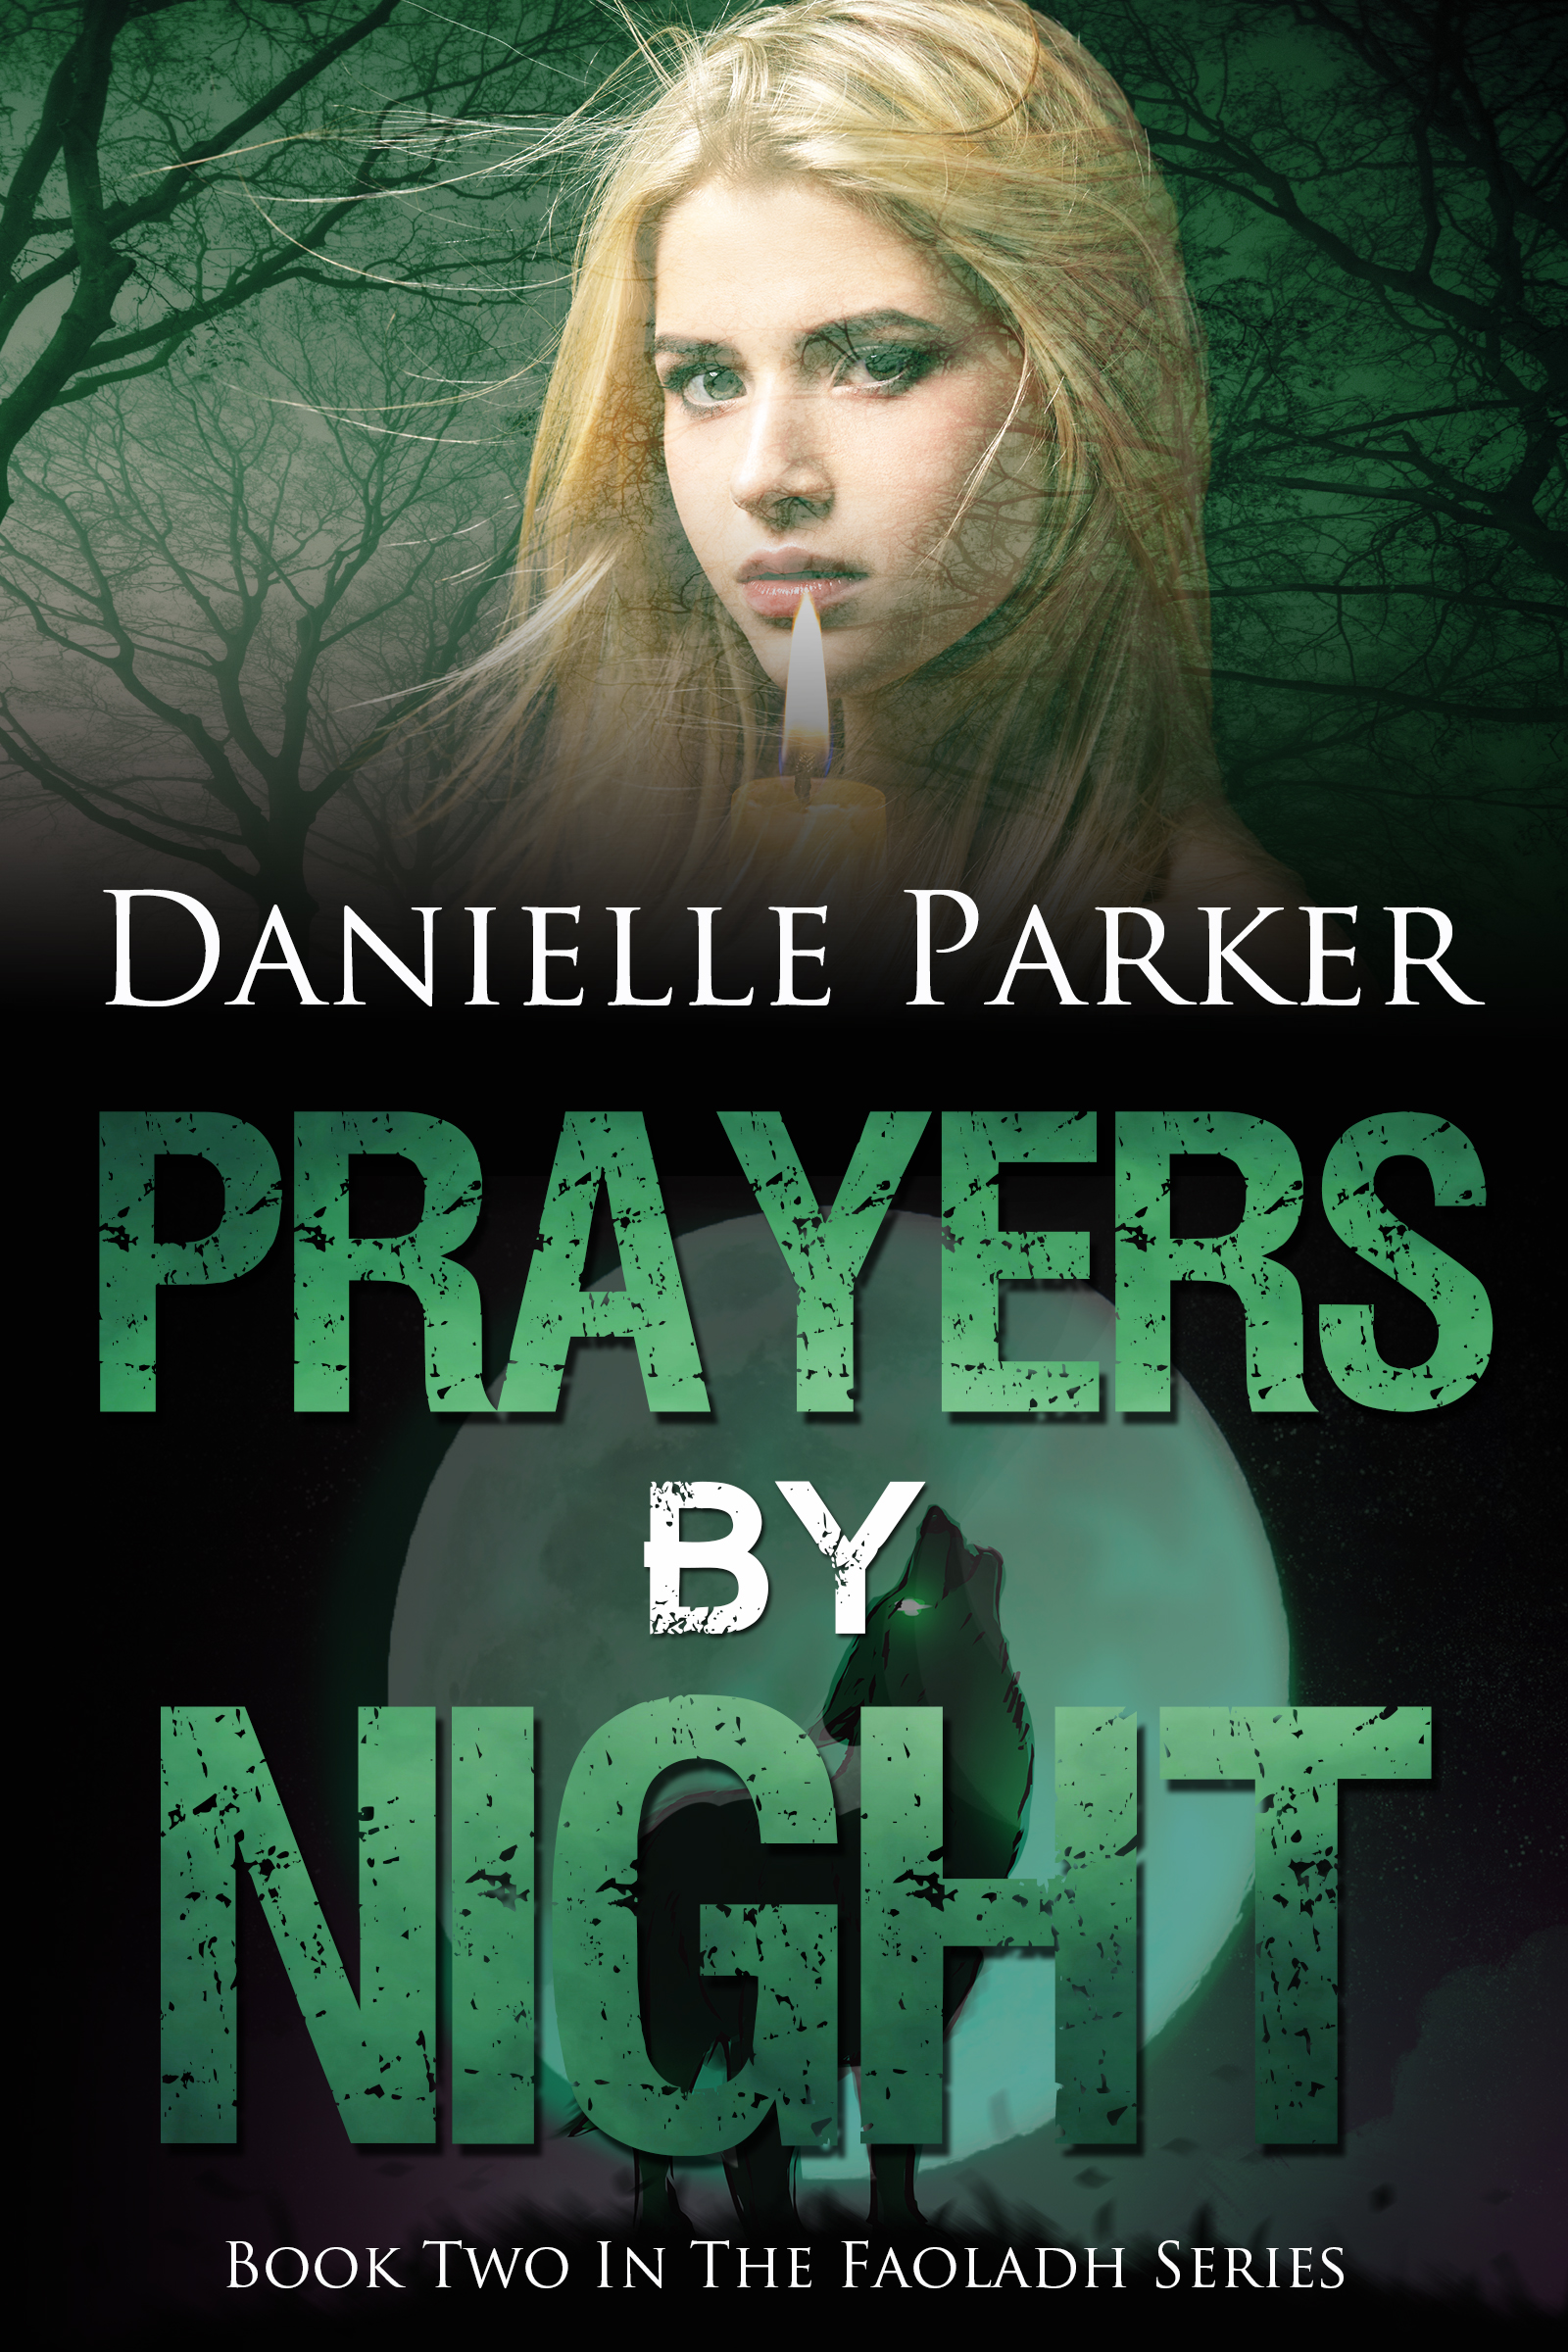 Prayers by Night